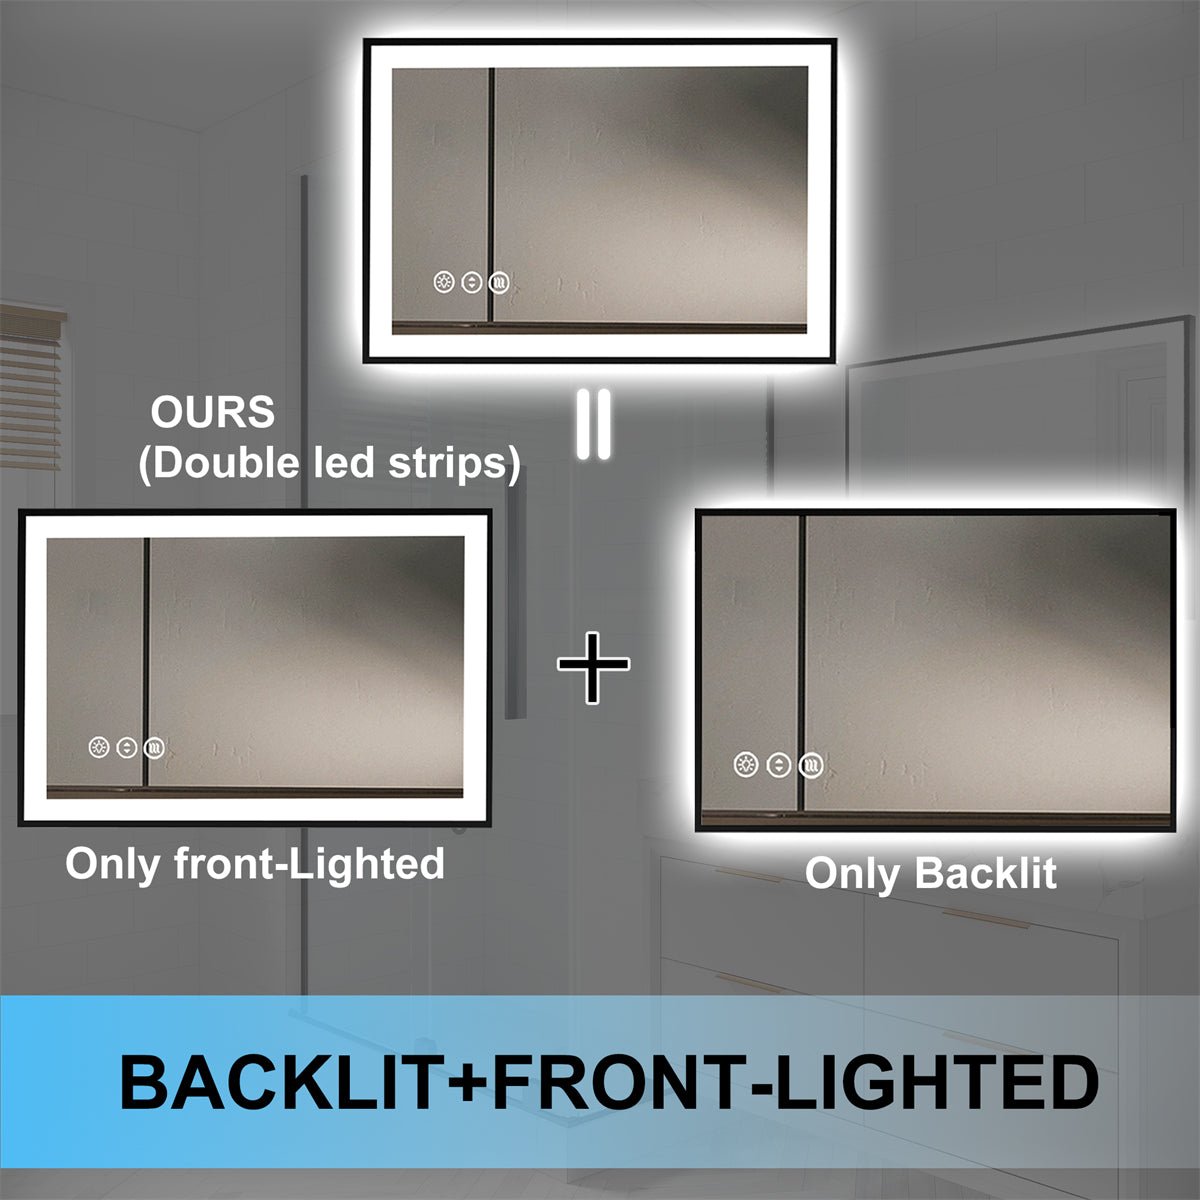 Apex-Noir 88"x38" Framed LED Lighted Bathroom Mirror